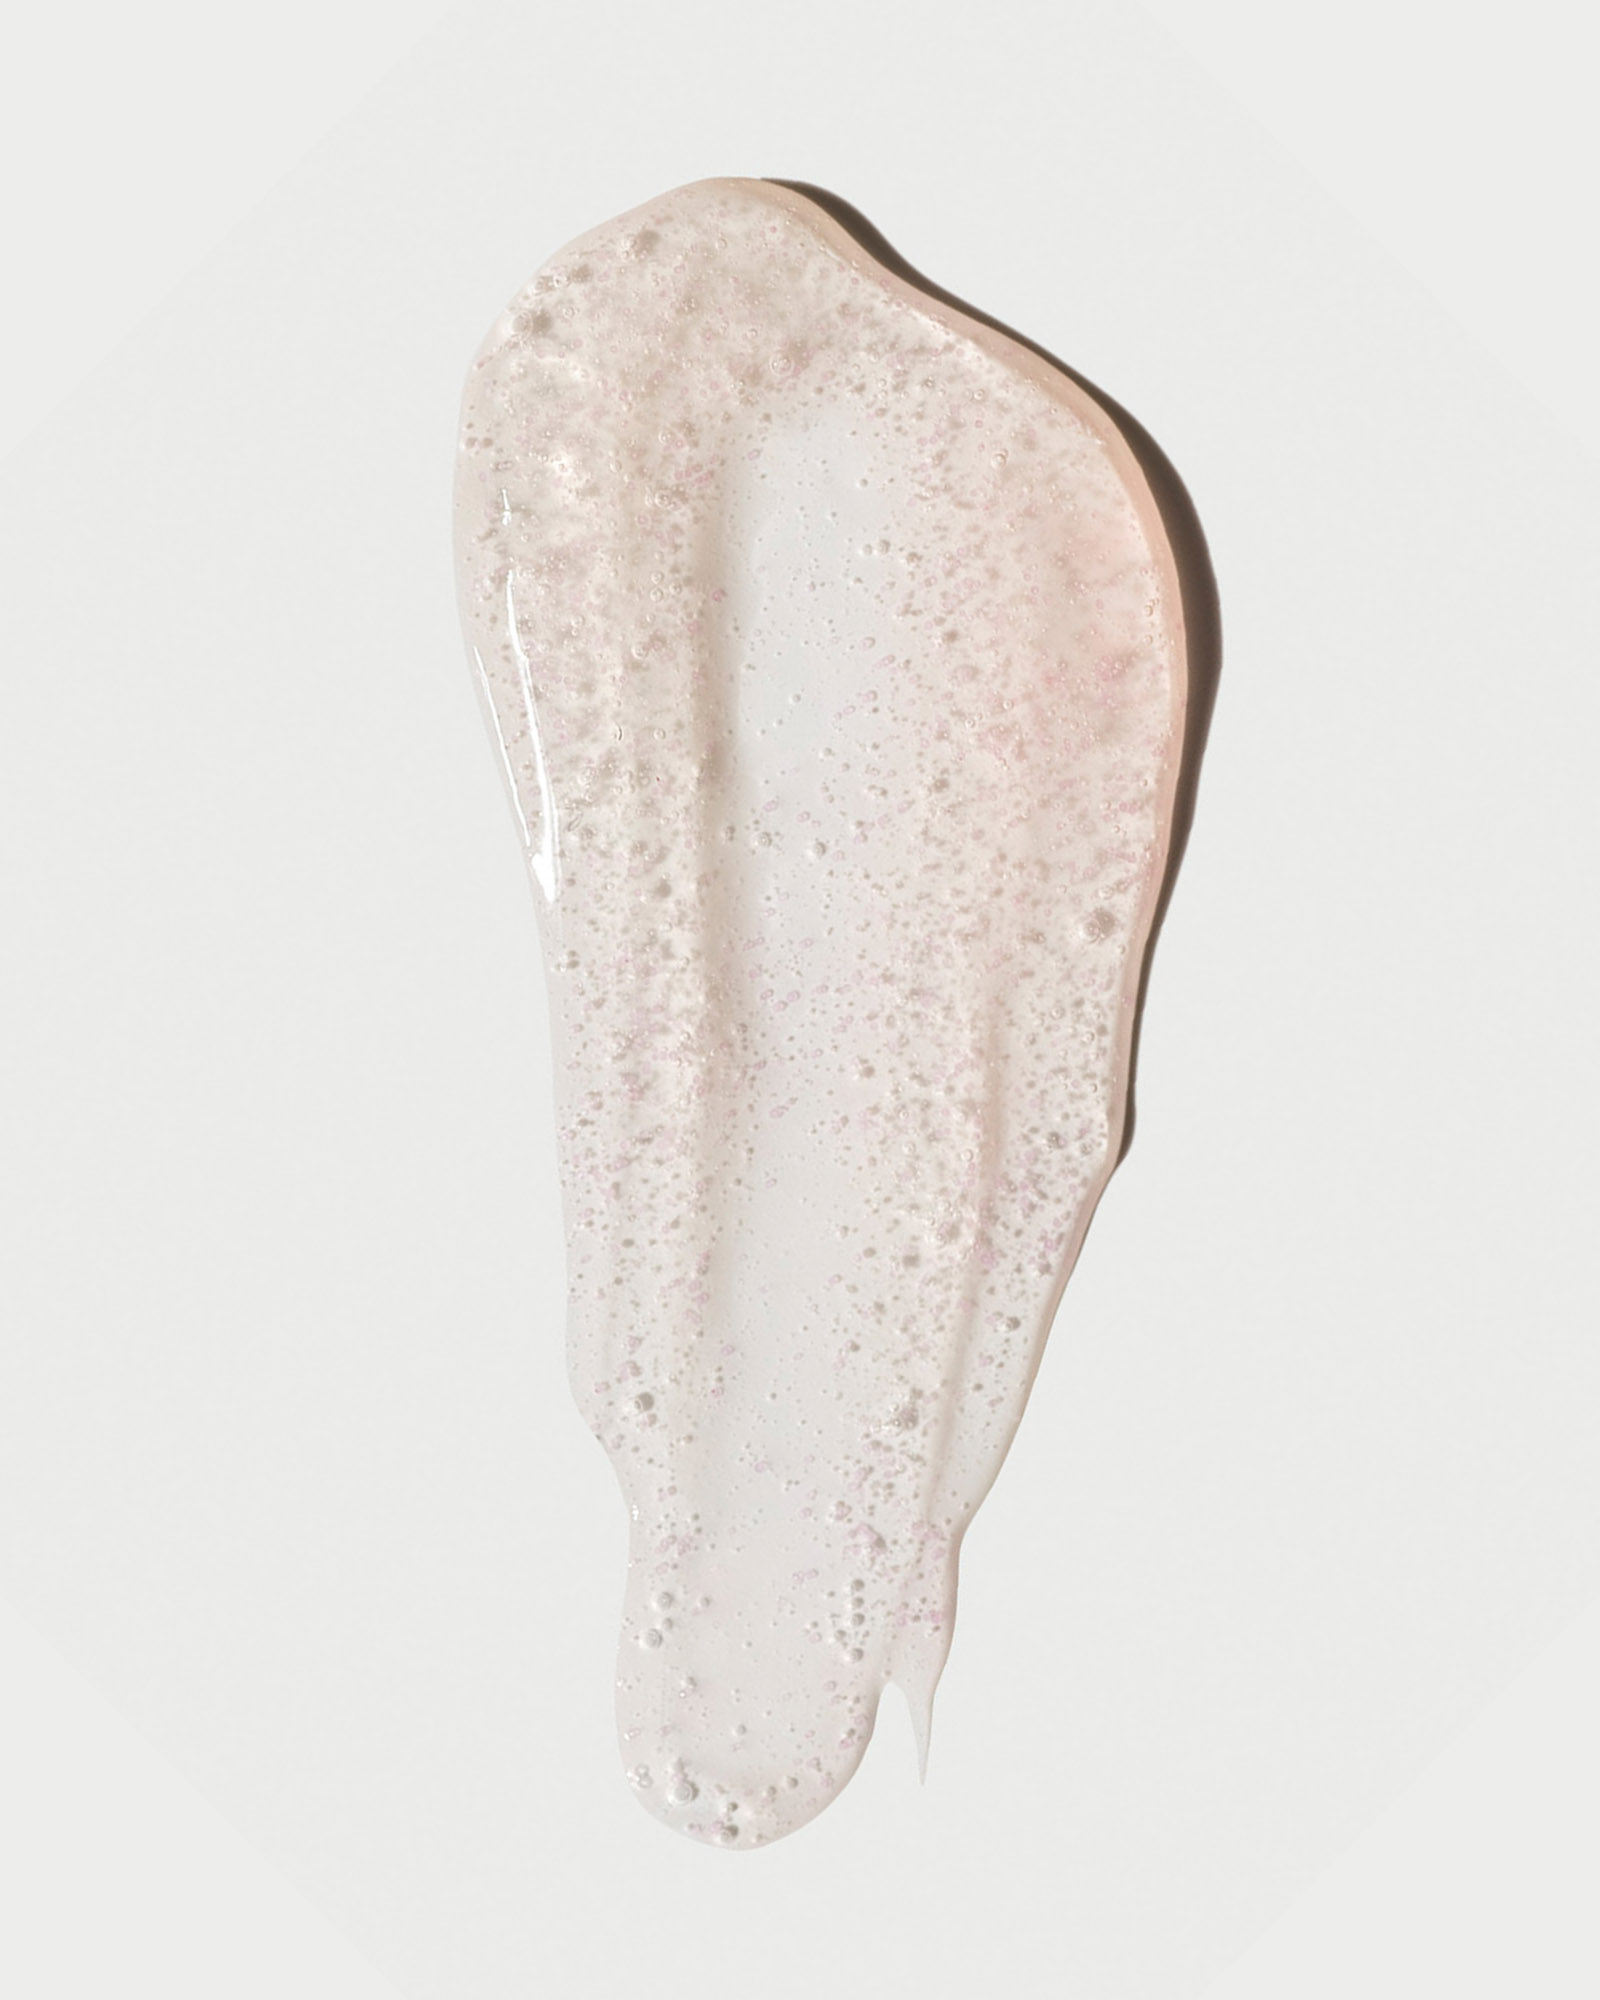 Formula swatch showcase the Rose Inc Skin Clarity Exfoliating Cleanser's Jojoba bead texture.